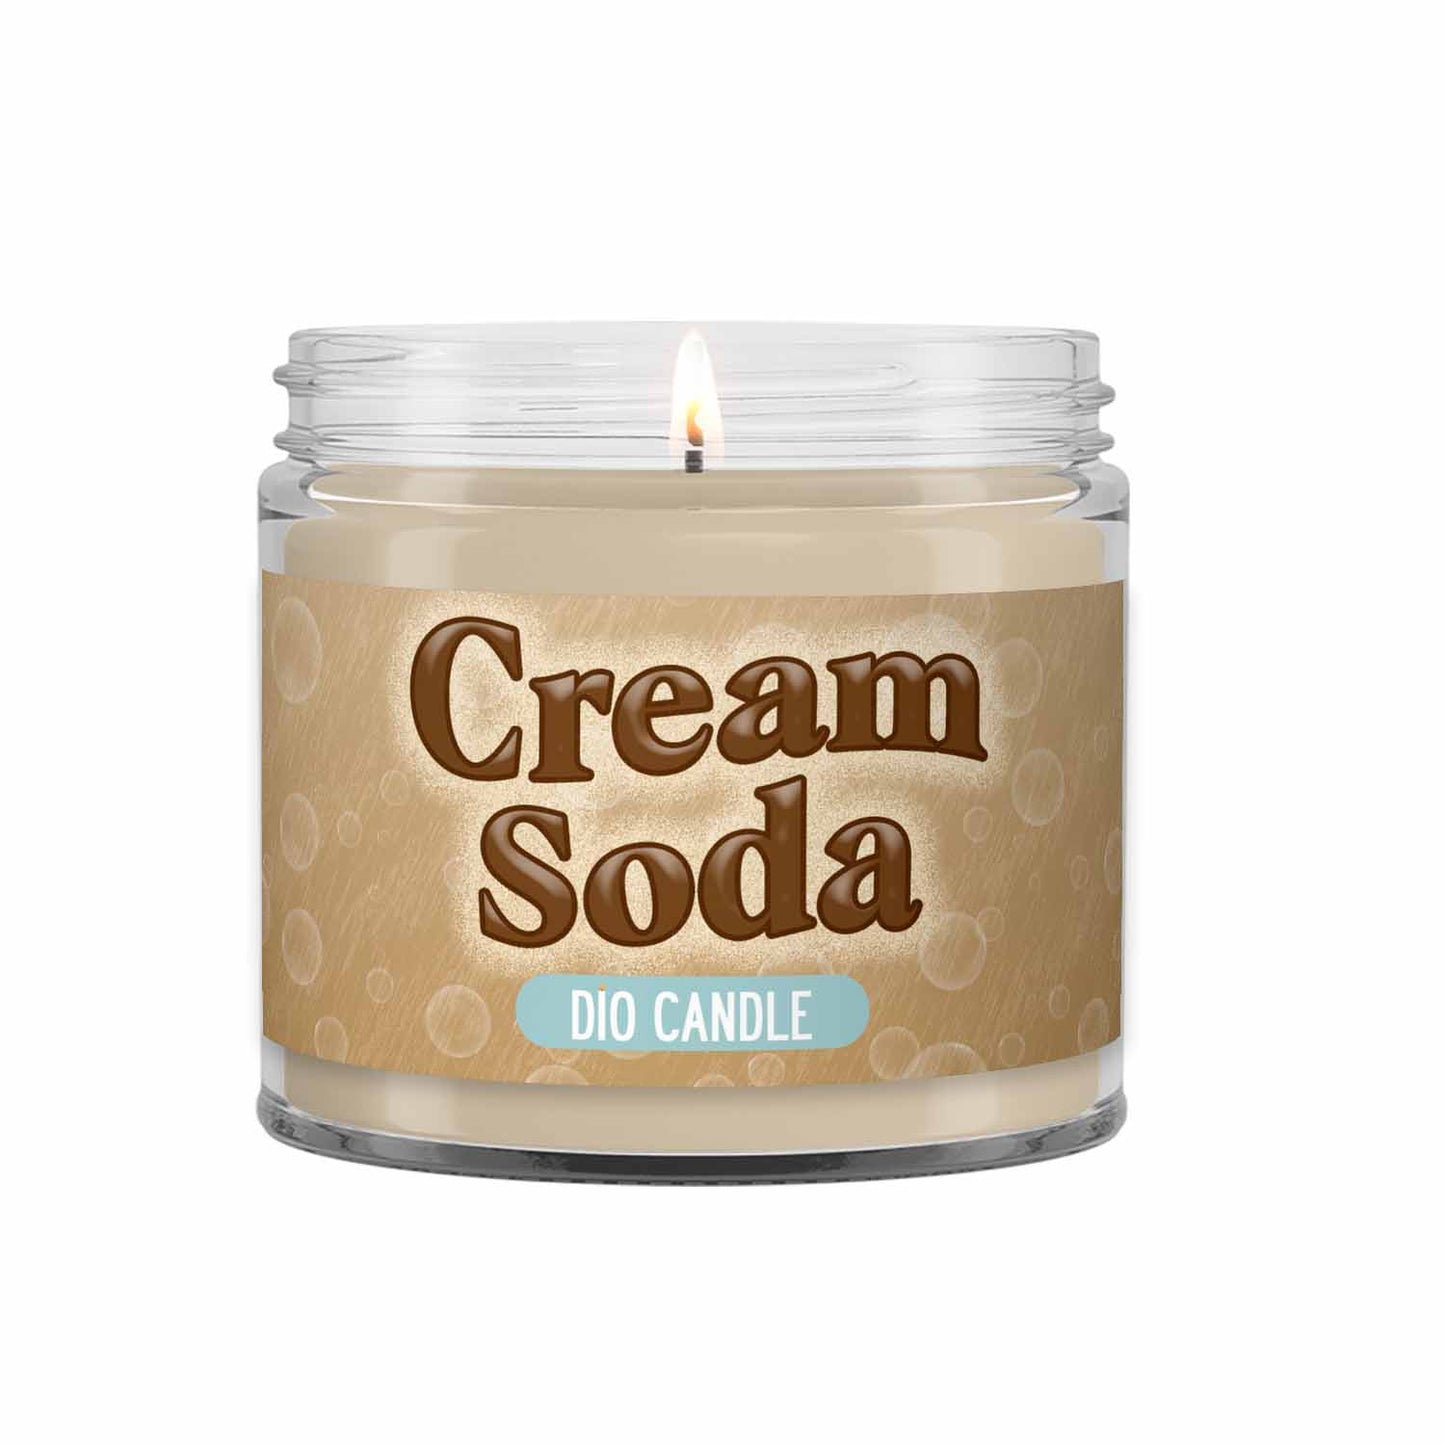 Cream Soda Candle